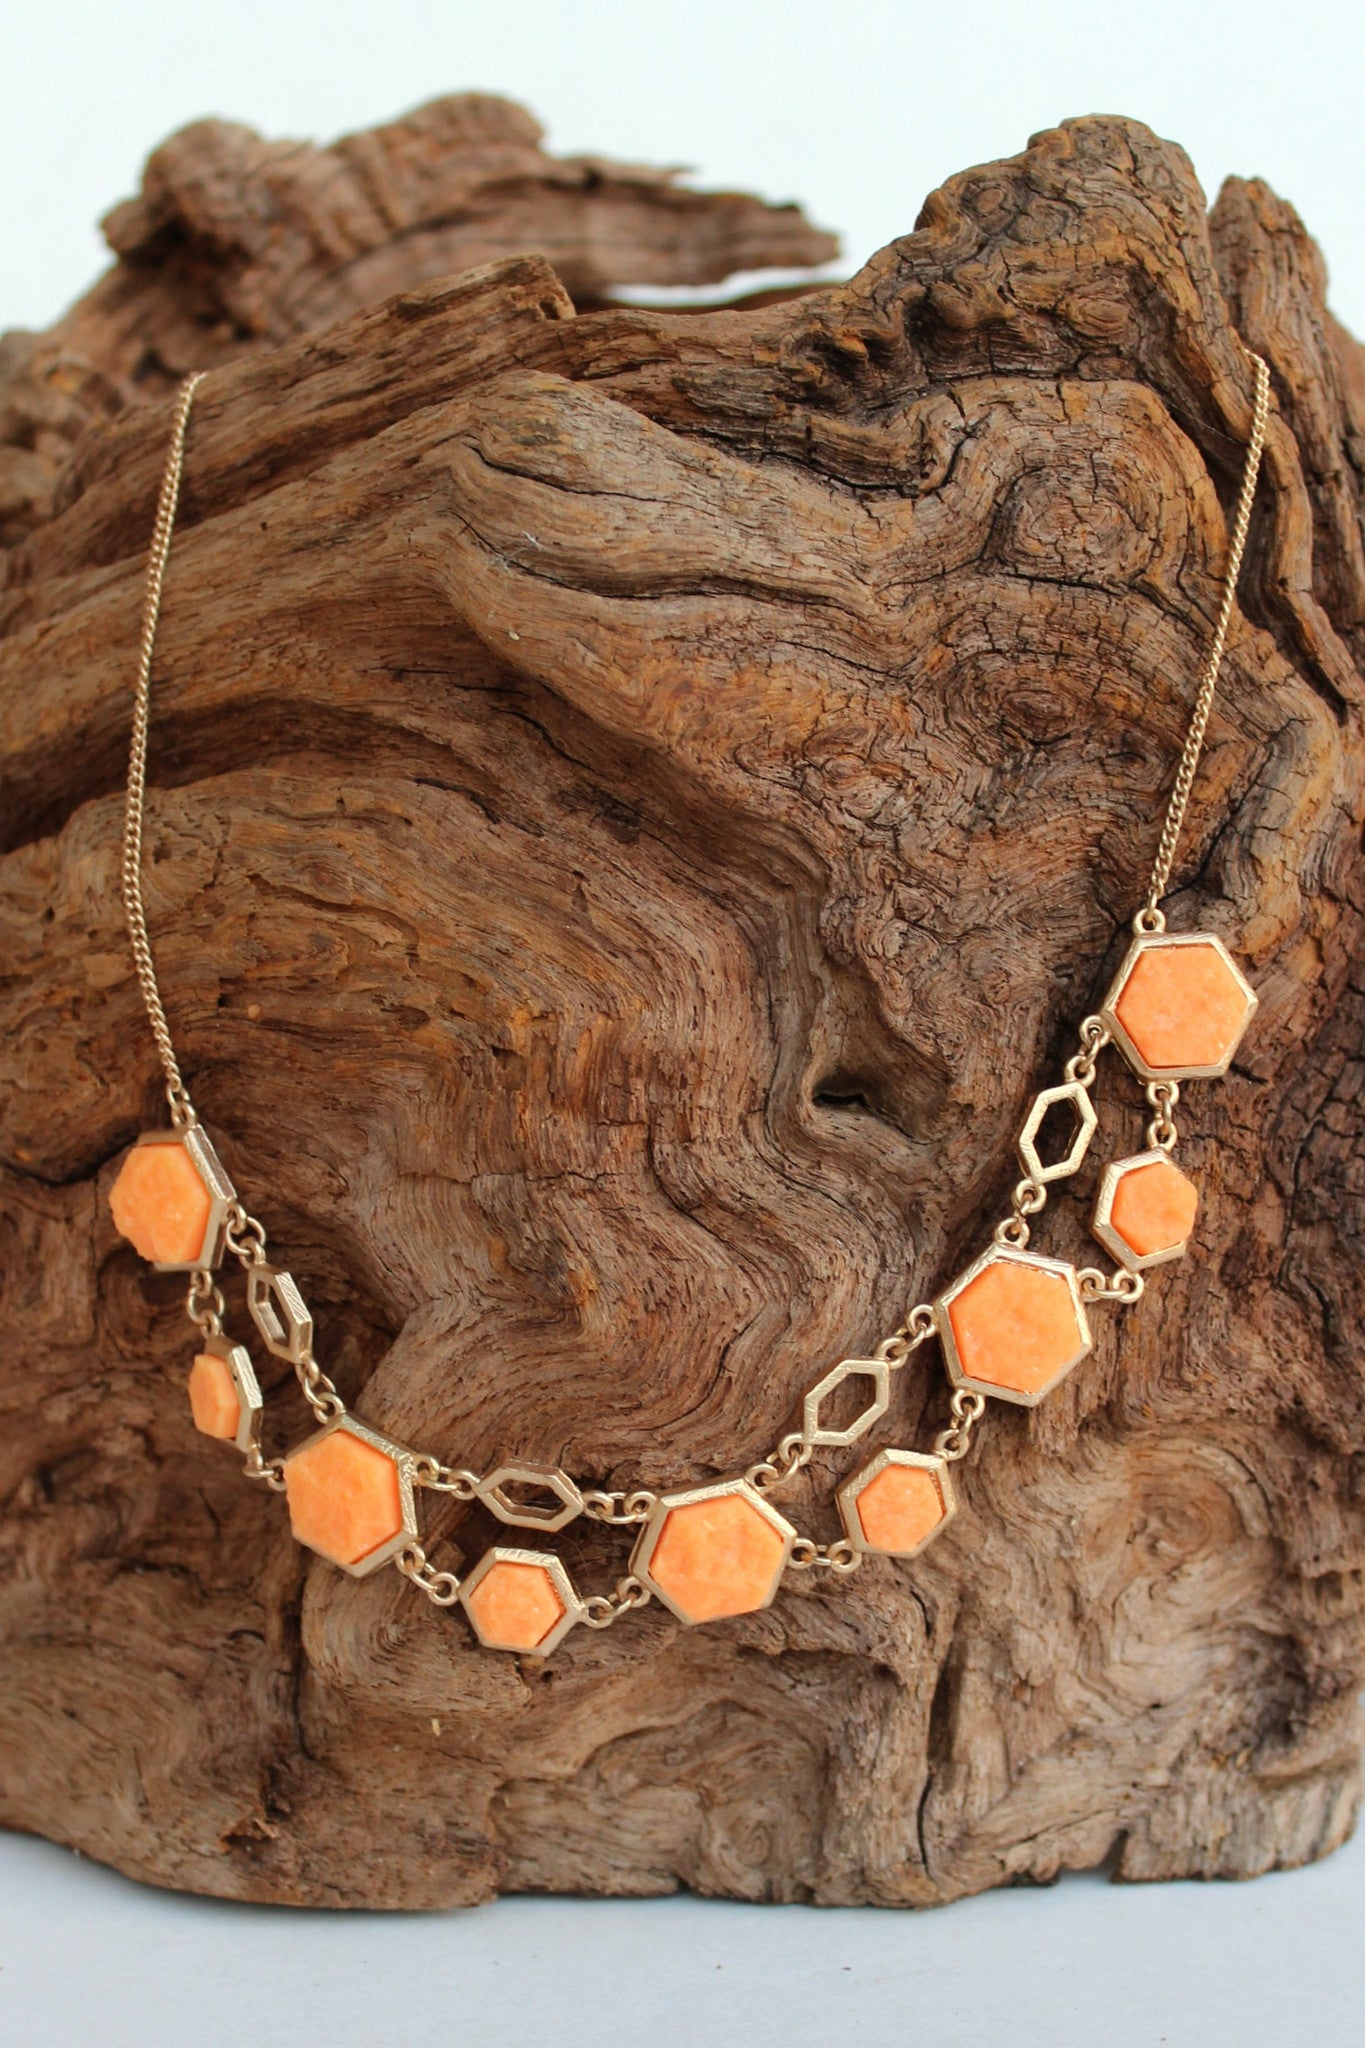 Double Hexagonal Necklace, Orange